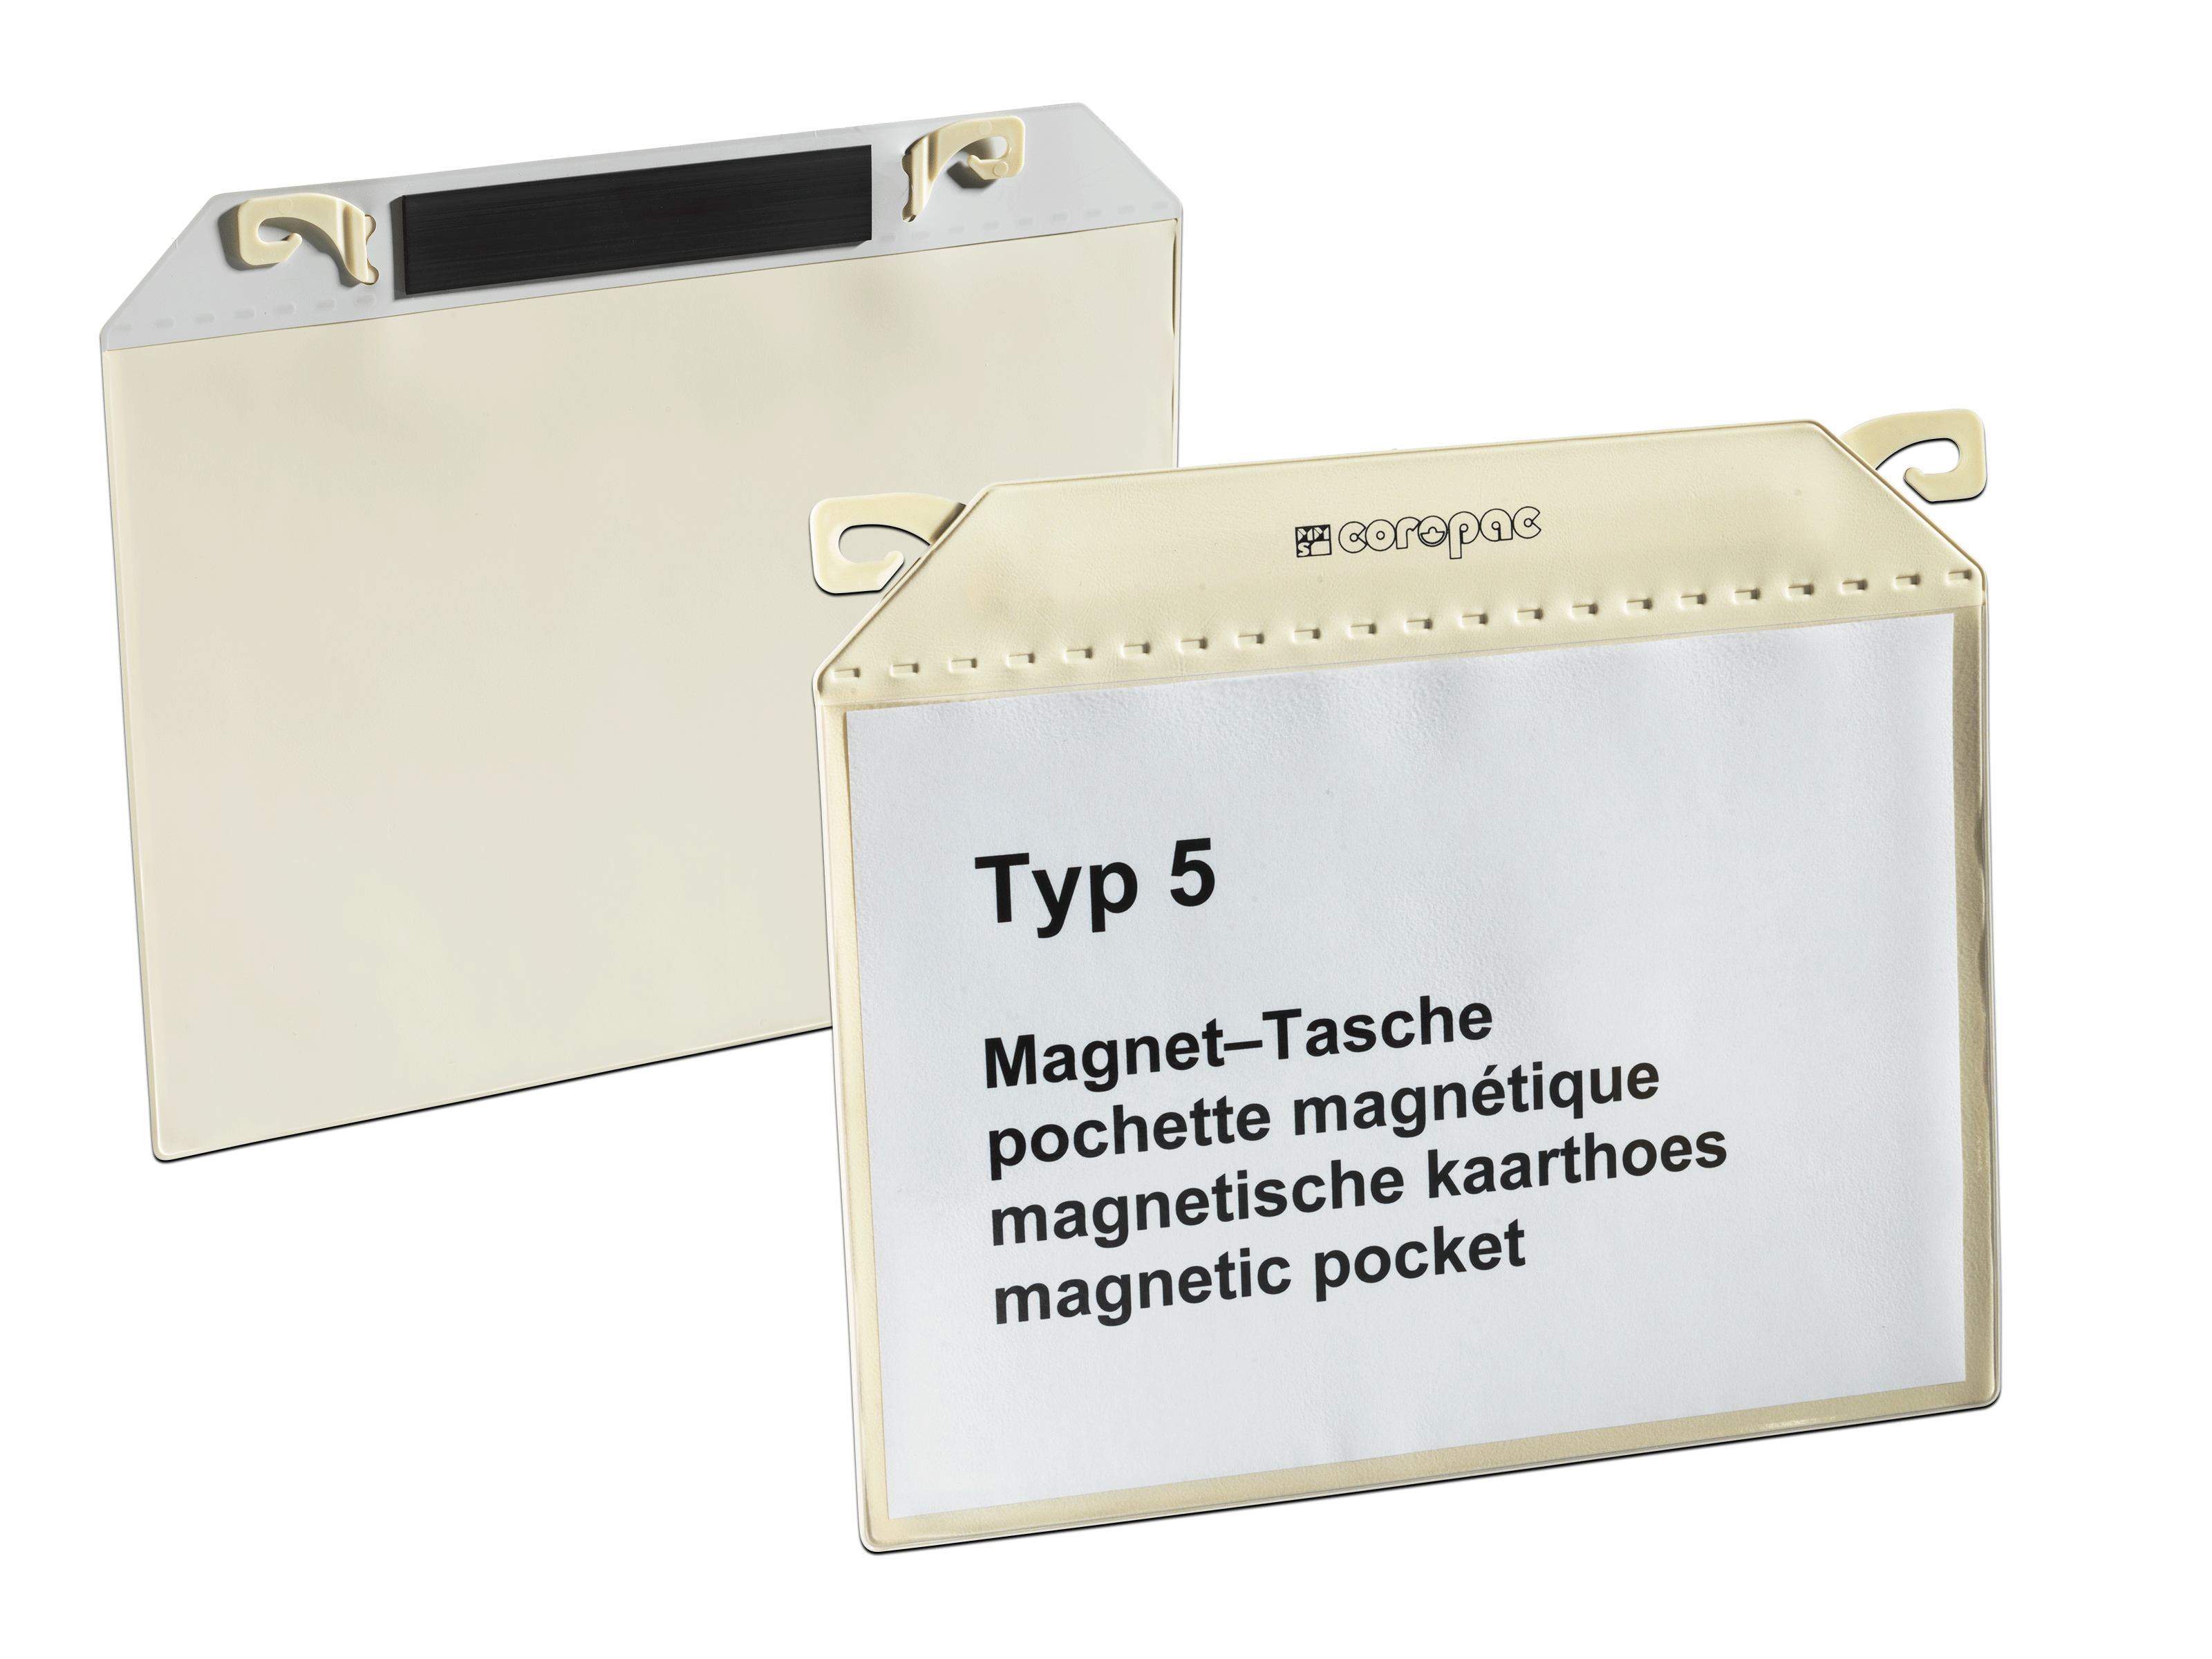 Magnettaschen coropac Typ 4 Magnetband grau scannerlesbar 310x255mm DIN A4 quer